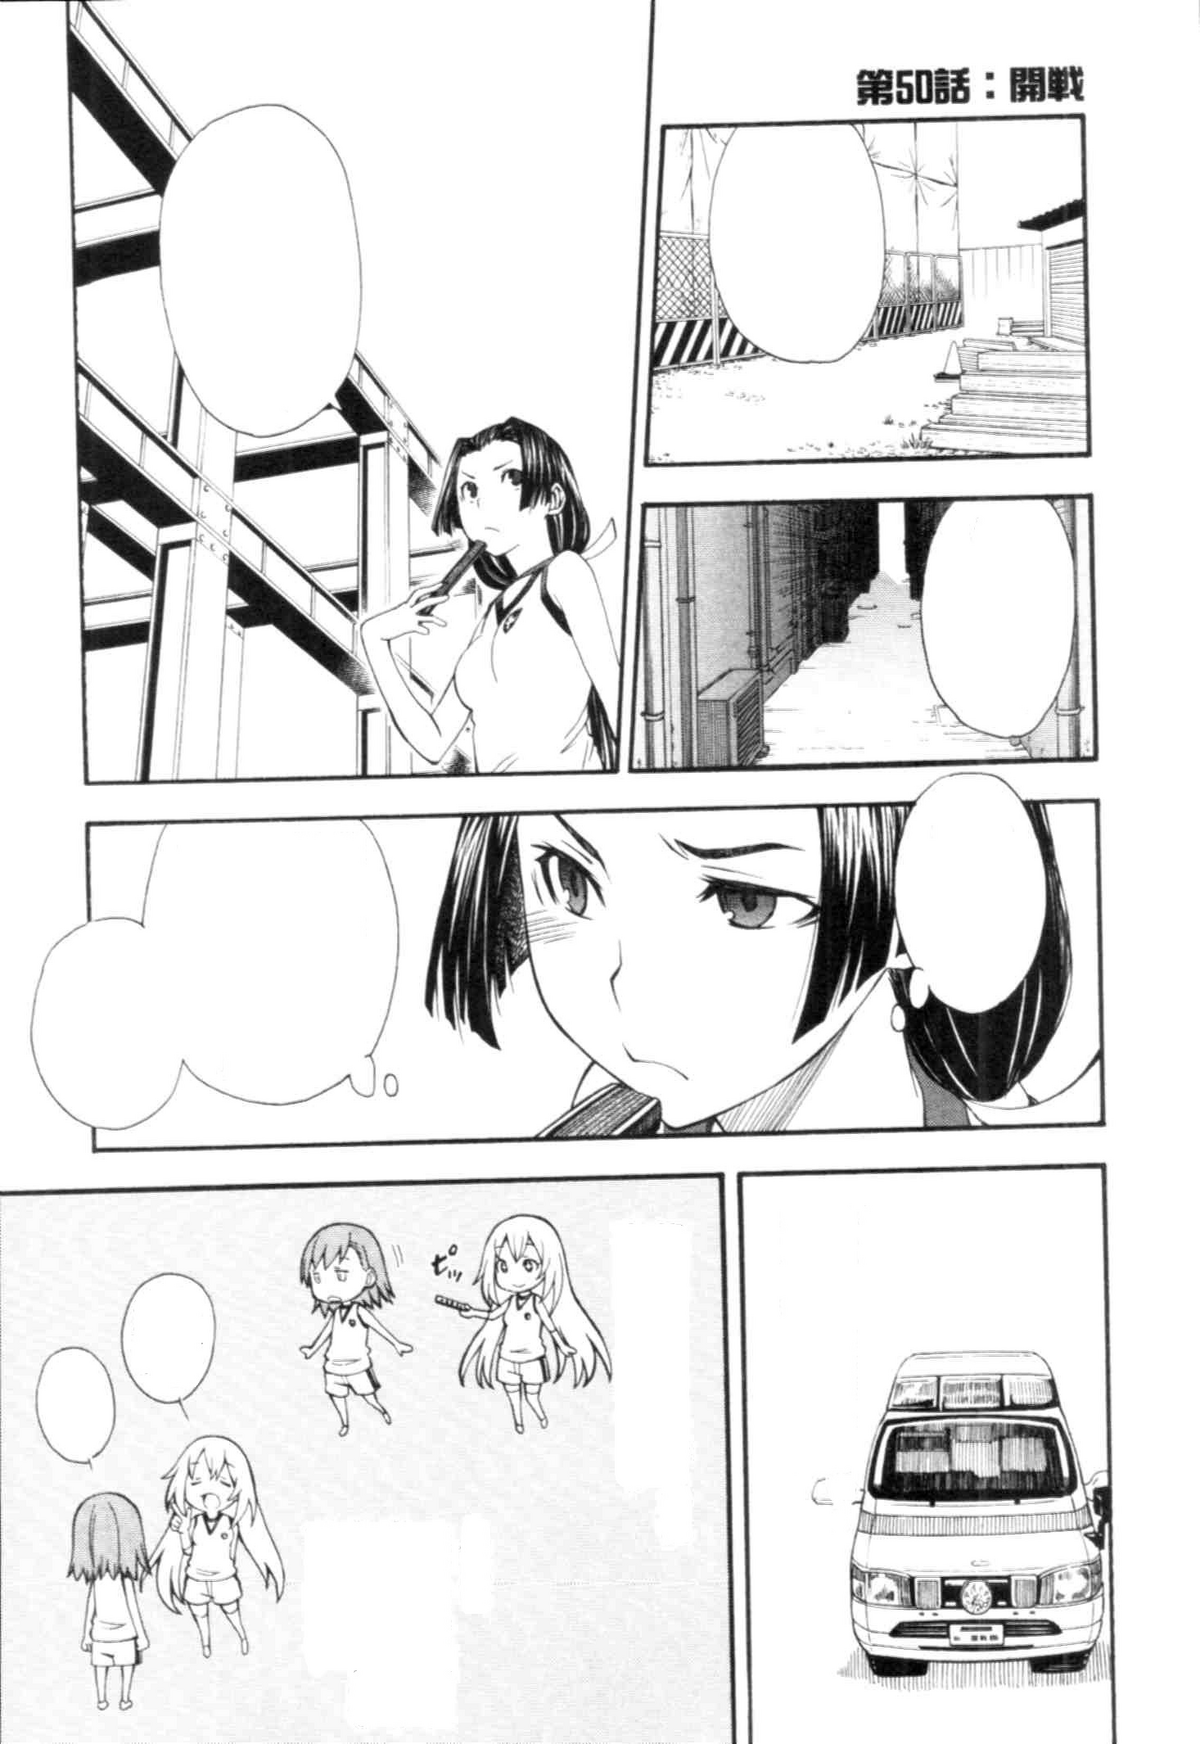 Kamijou Touma on X: Toaru Kagaku no Railgun Manga Chapter 92 VS Railgun T  Anime Episode 24 Comparison  / X